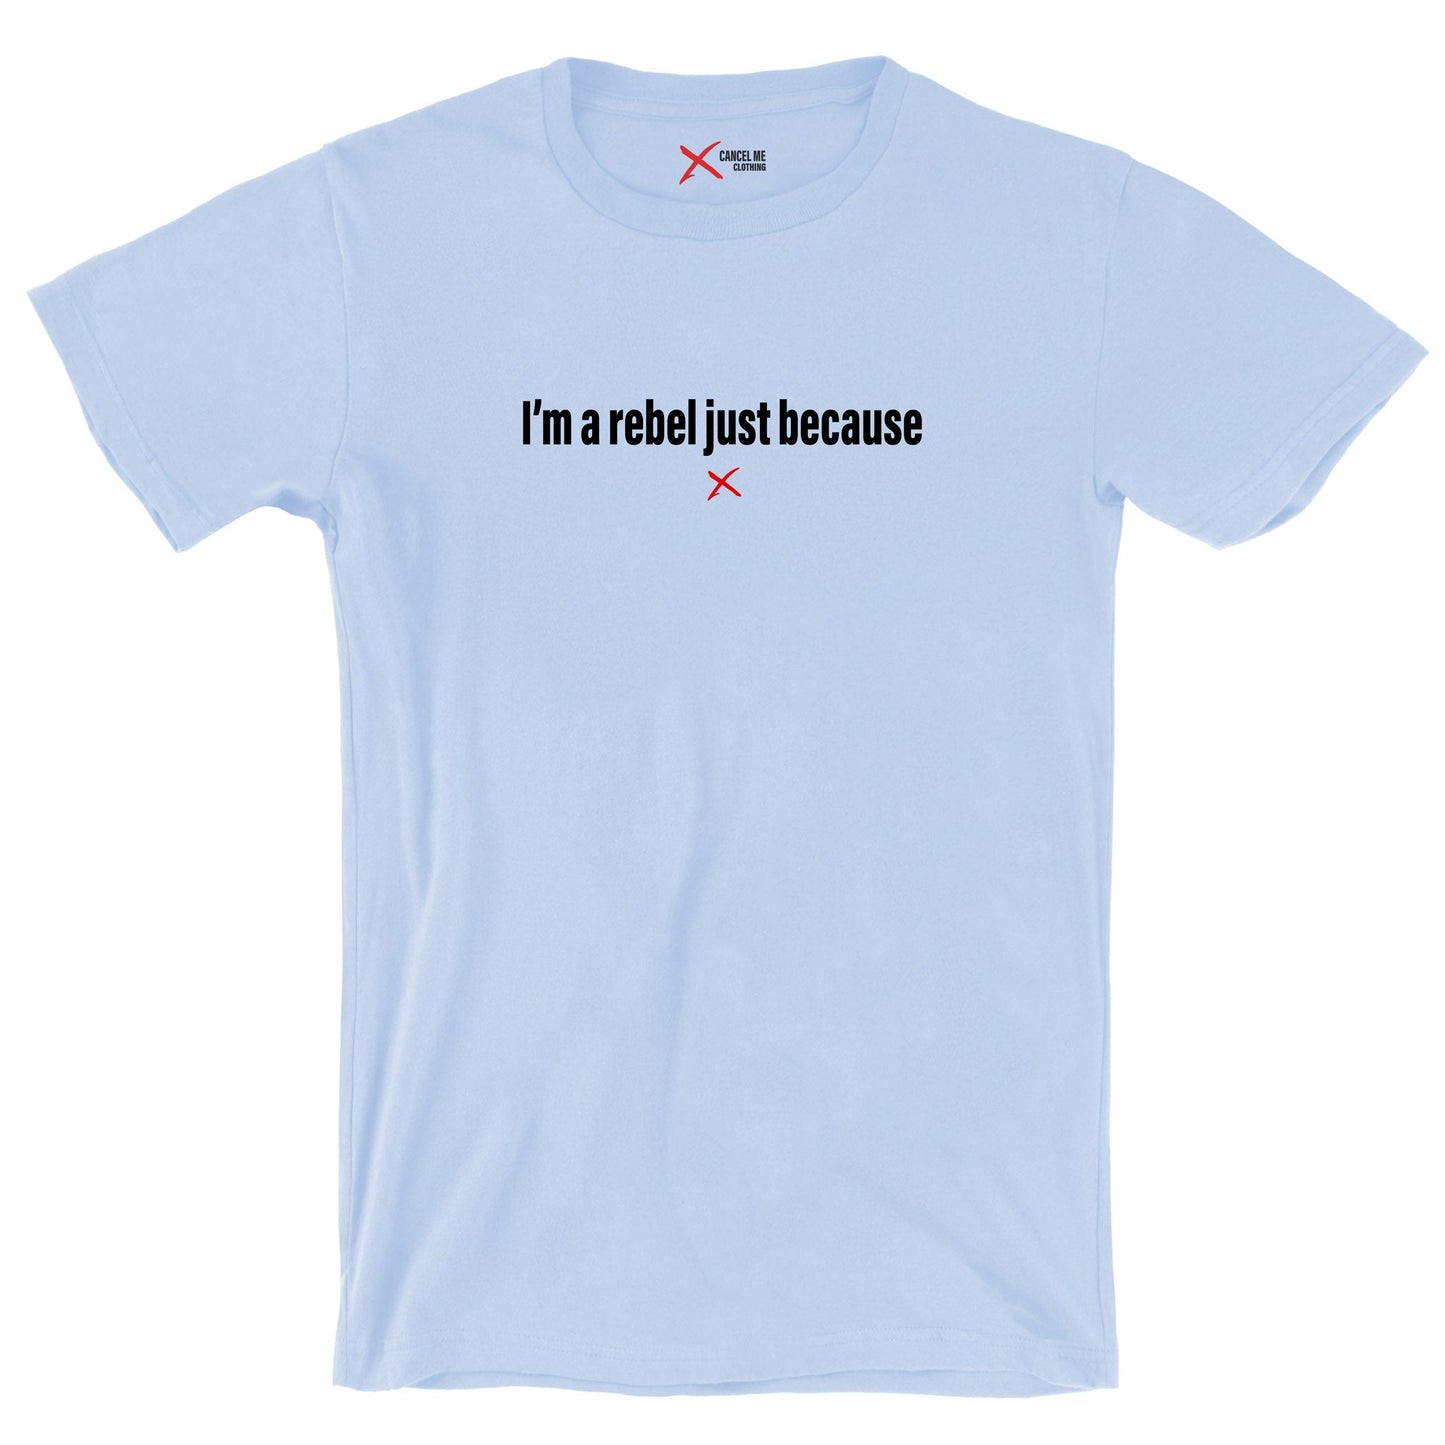 I'm a rebel just because - Shirt